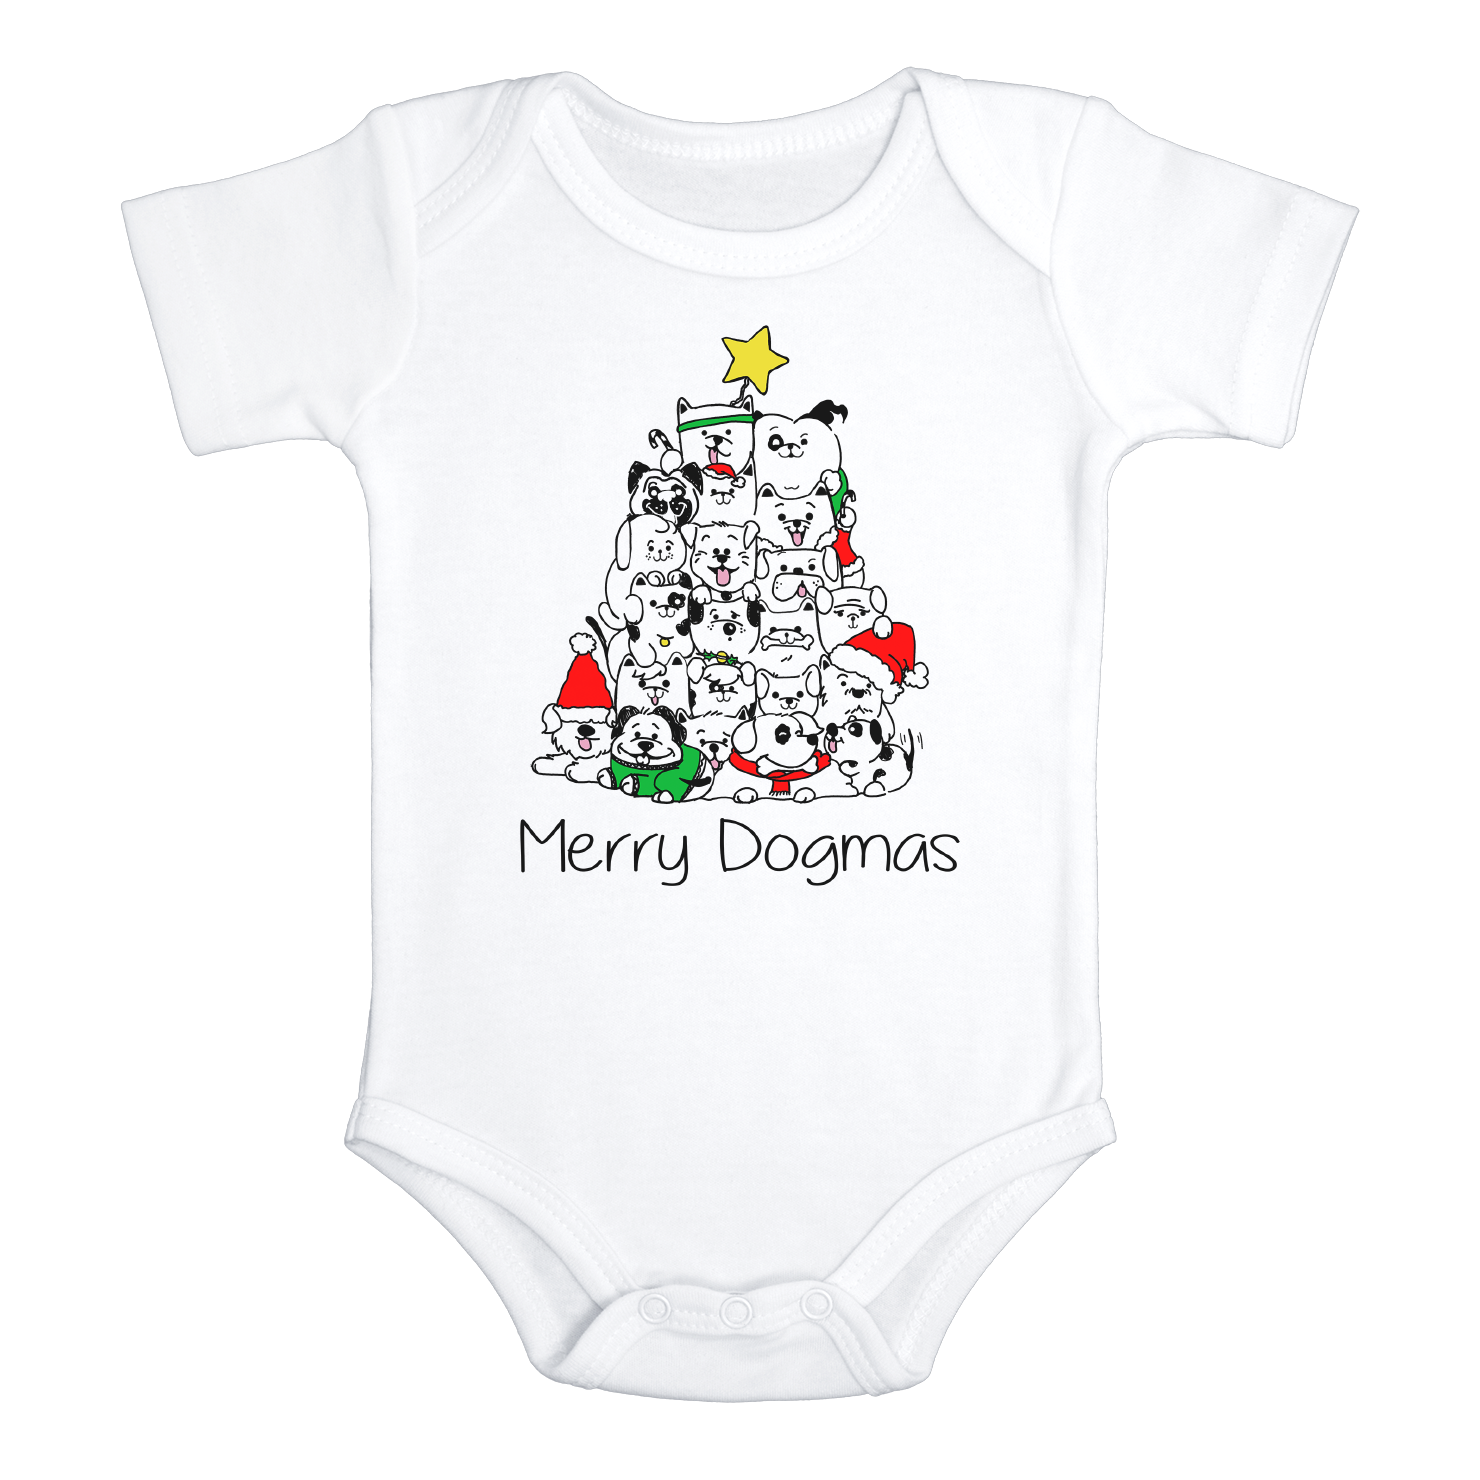 MERRY DOGMAS Funny baby Dog onesies Christmas bodysuit (white: short or long sleeve)